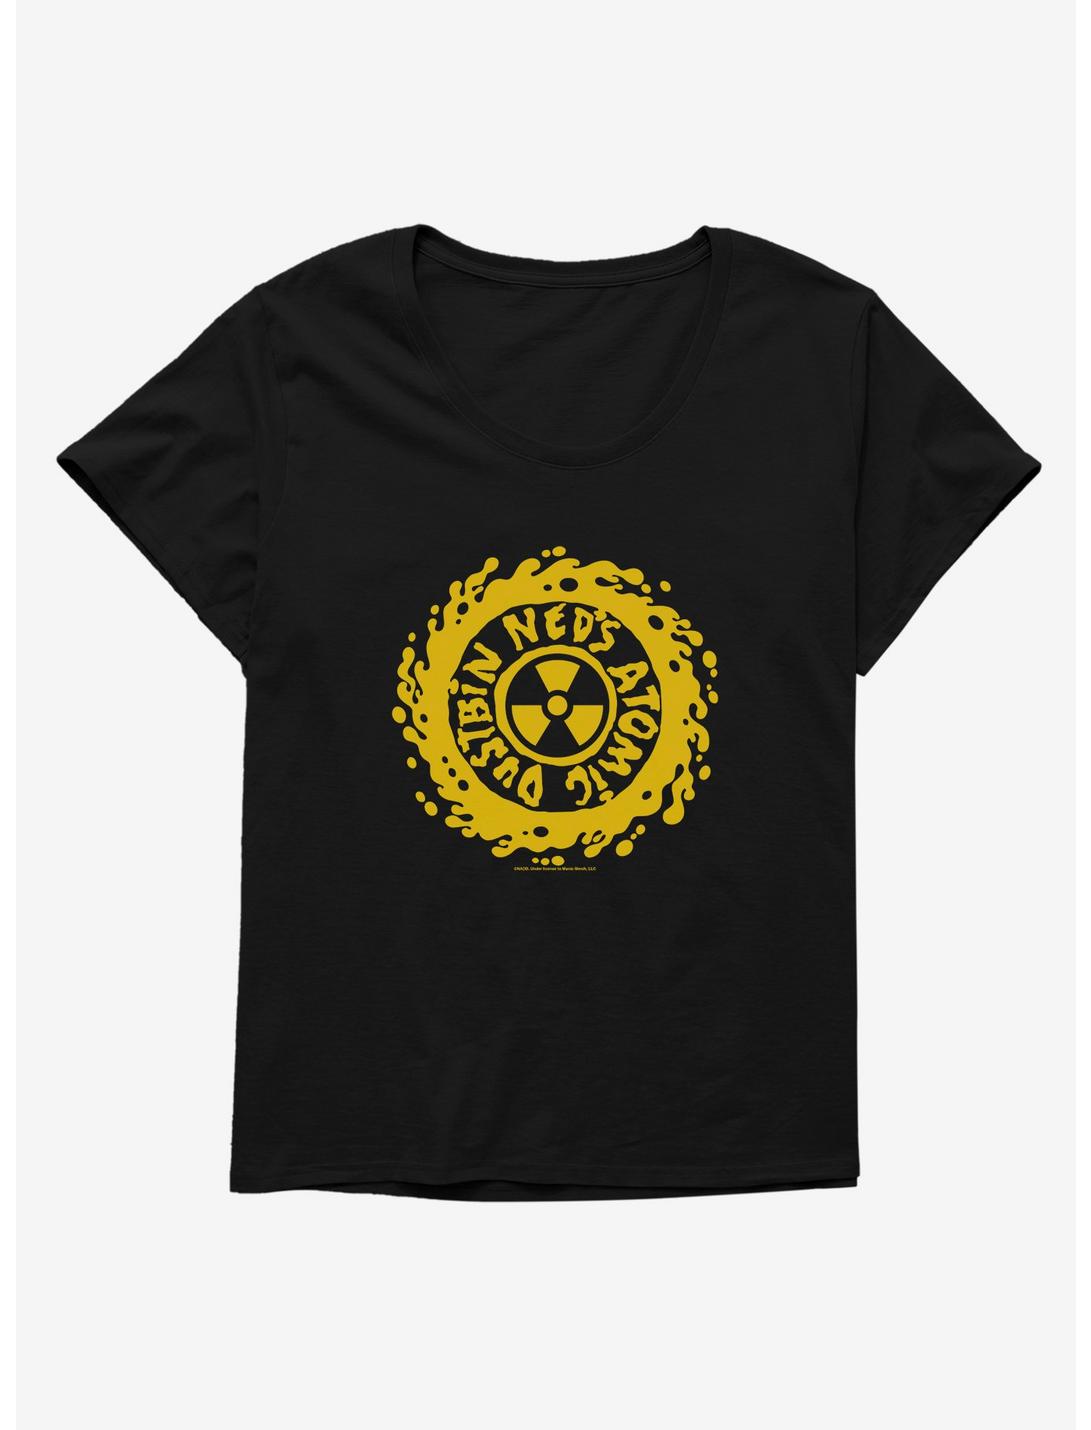 Ned's Atomic Dustbin Biohazard Logo Girls T-Shirt Plus Size, BLACK, hi-res